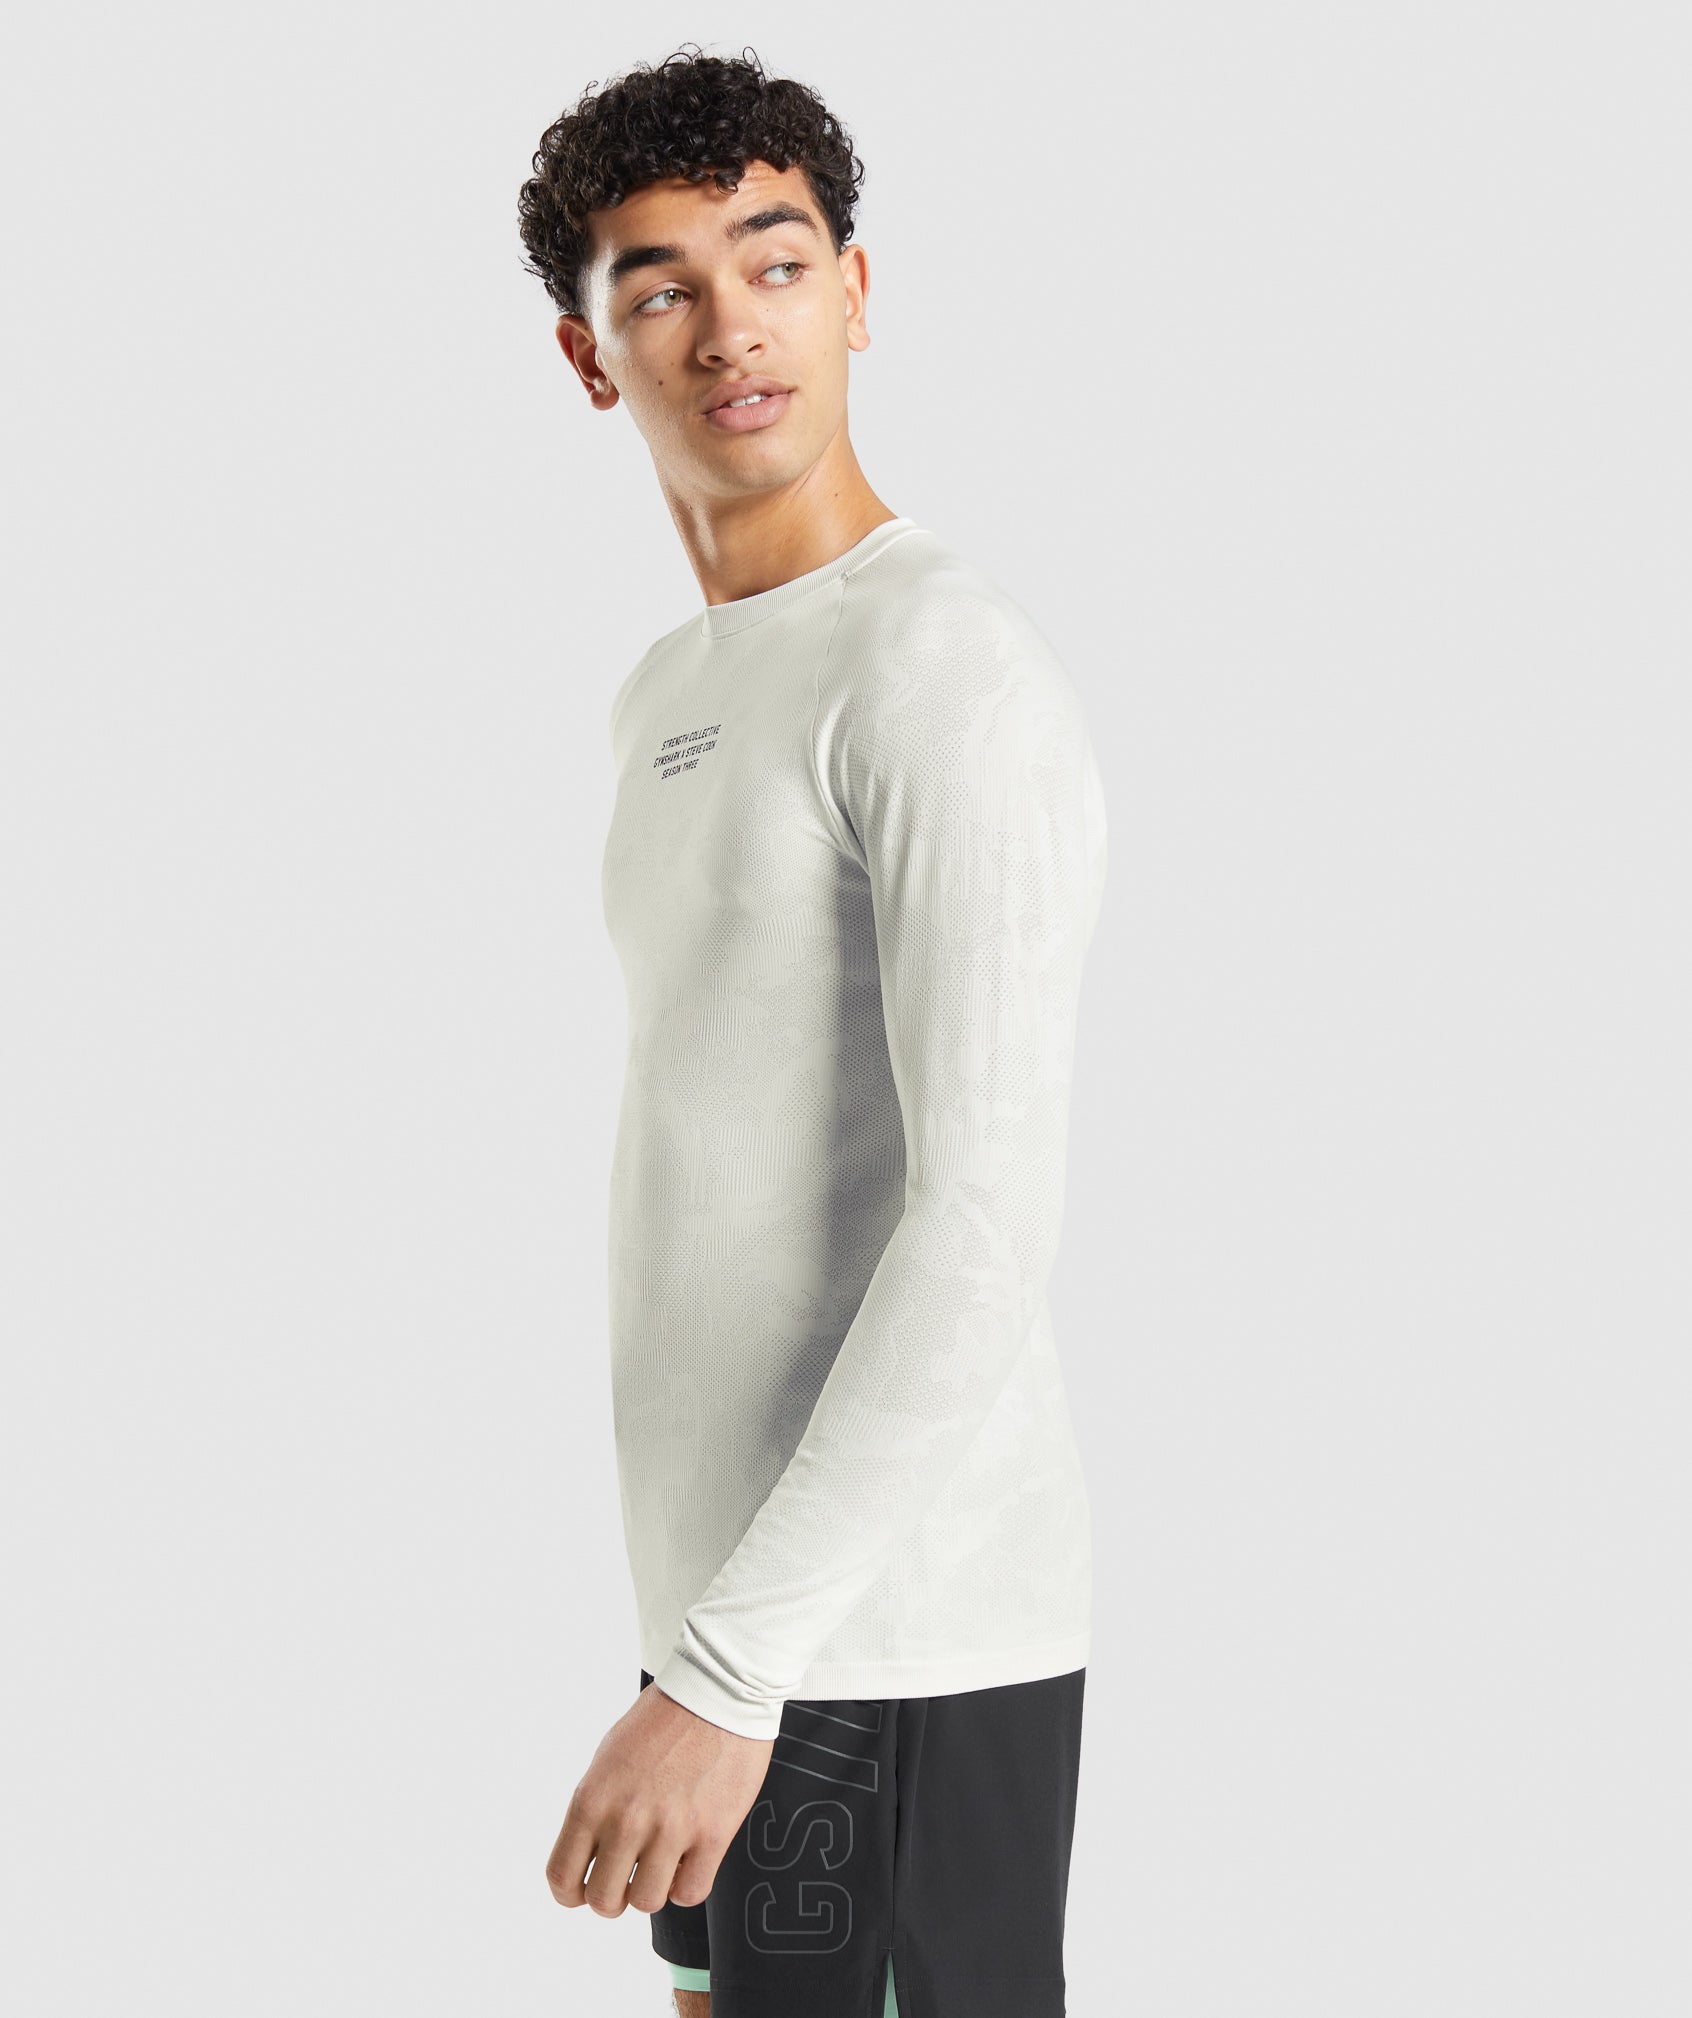 Gymshark//Steve Cook Long Sleeve Seamless T-Shirt in Off White/Light Grey - view 3